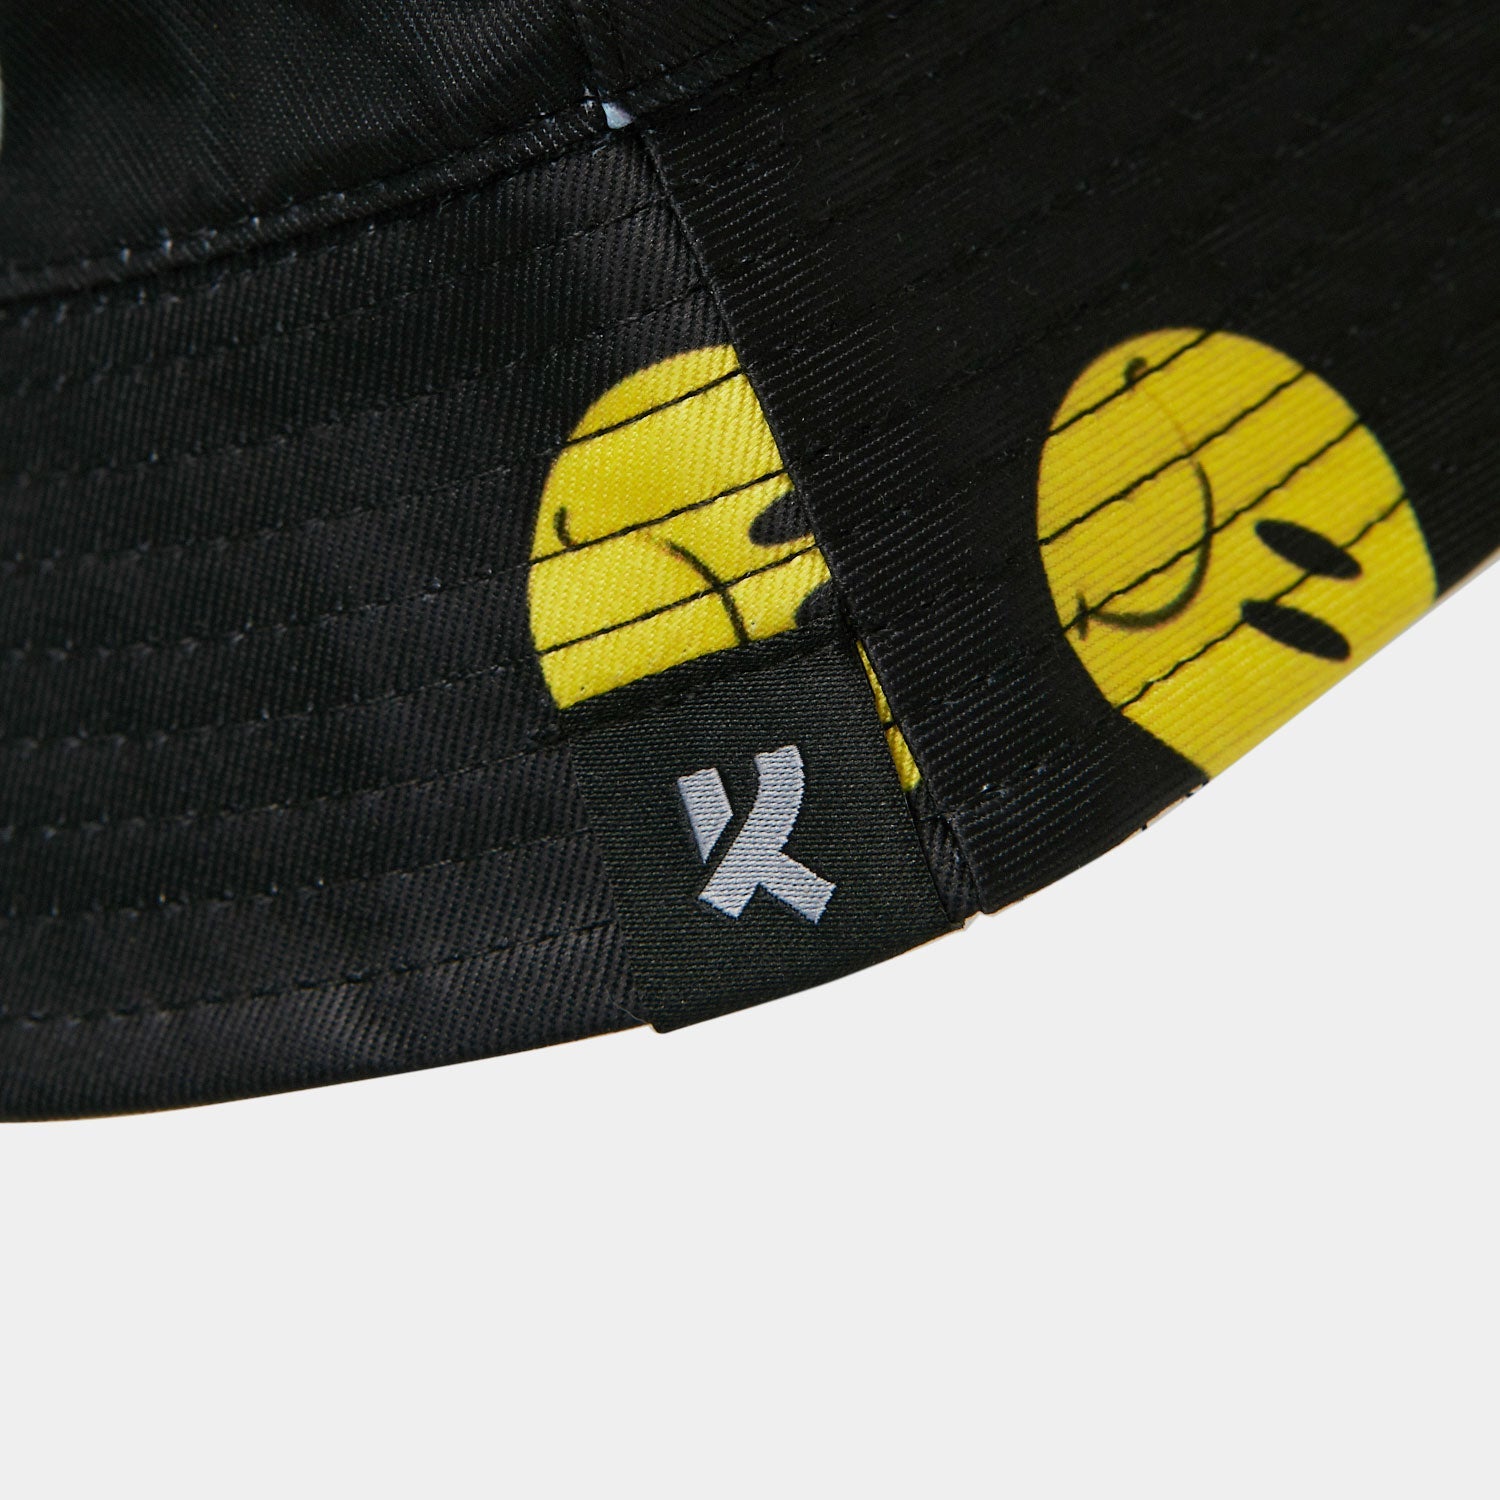 Mixed Emotions Black Bucket Hat - Accessories - KOI Footwear - Black - Logo Detail